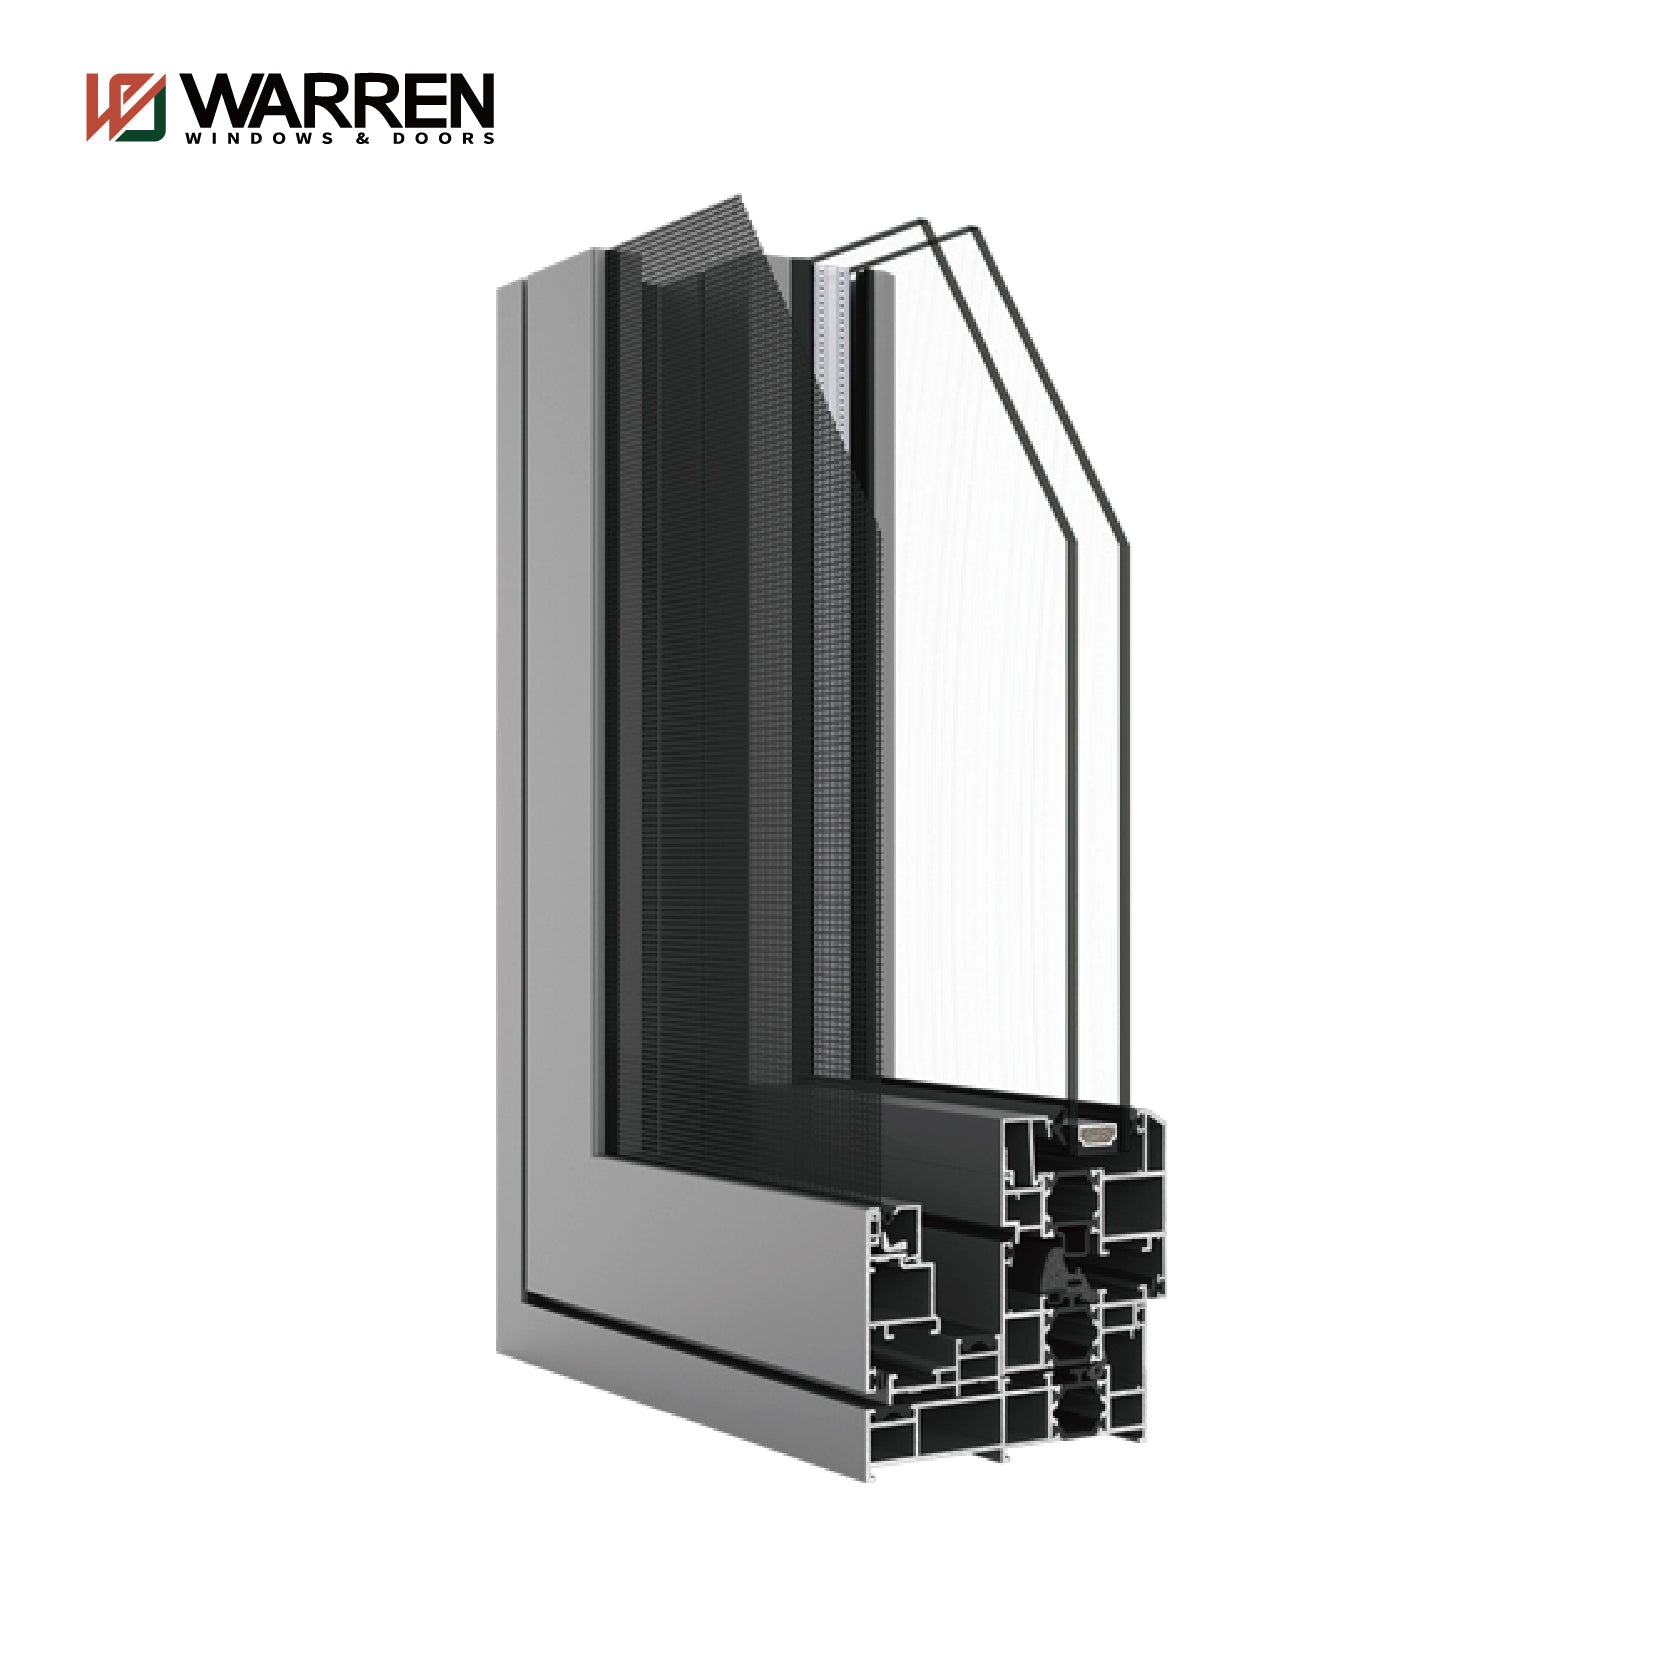 Sound Insulation And Heat Insulation Aluminum Casement Windows Casement Windows With Mosqui To Net